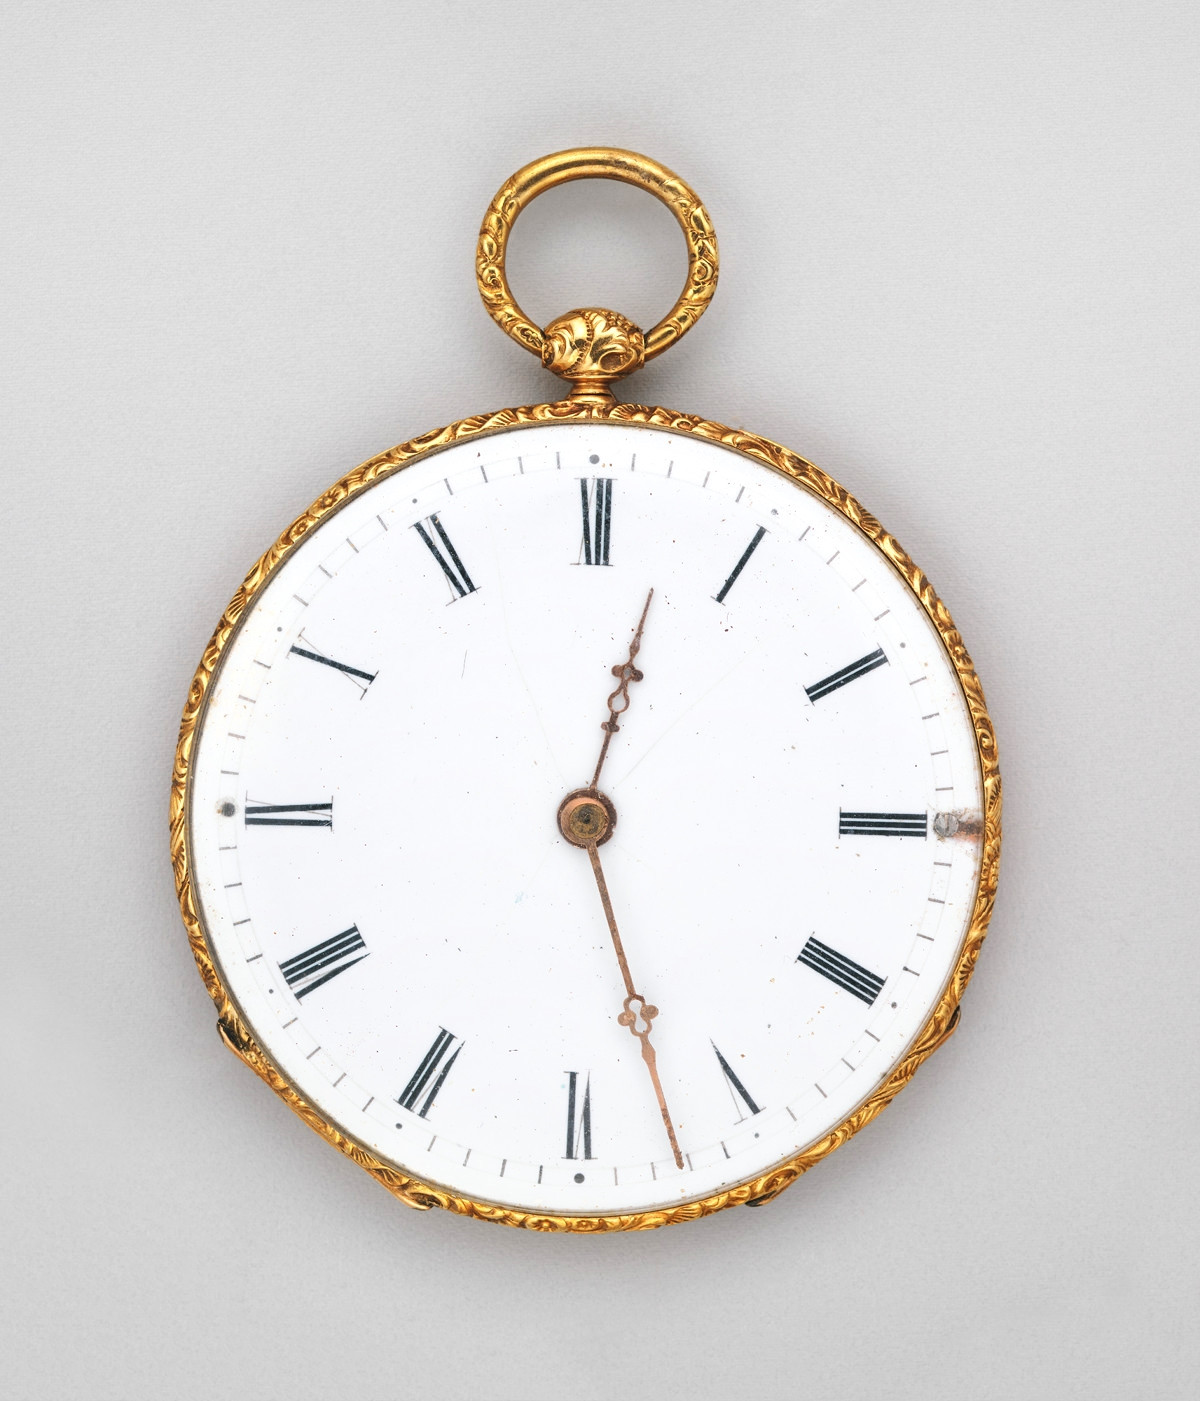 1830. Watch. Swiss, Geneva. Gold, enamel. metmuseum